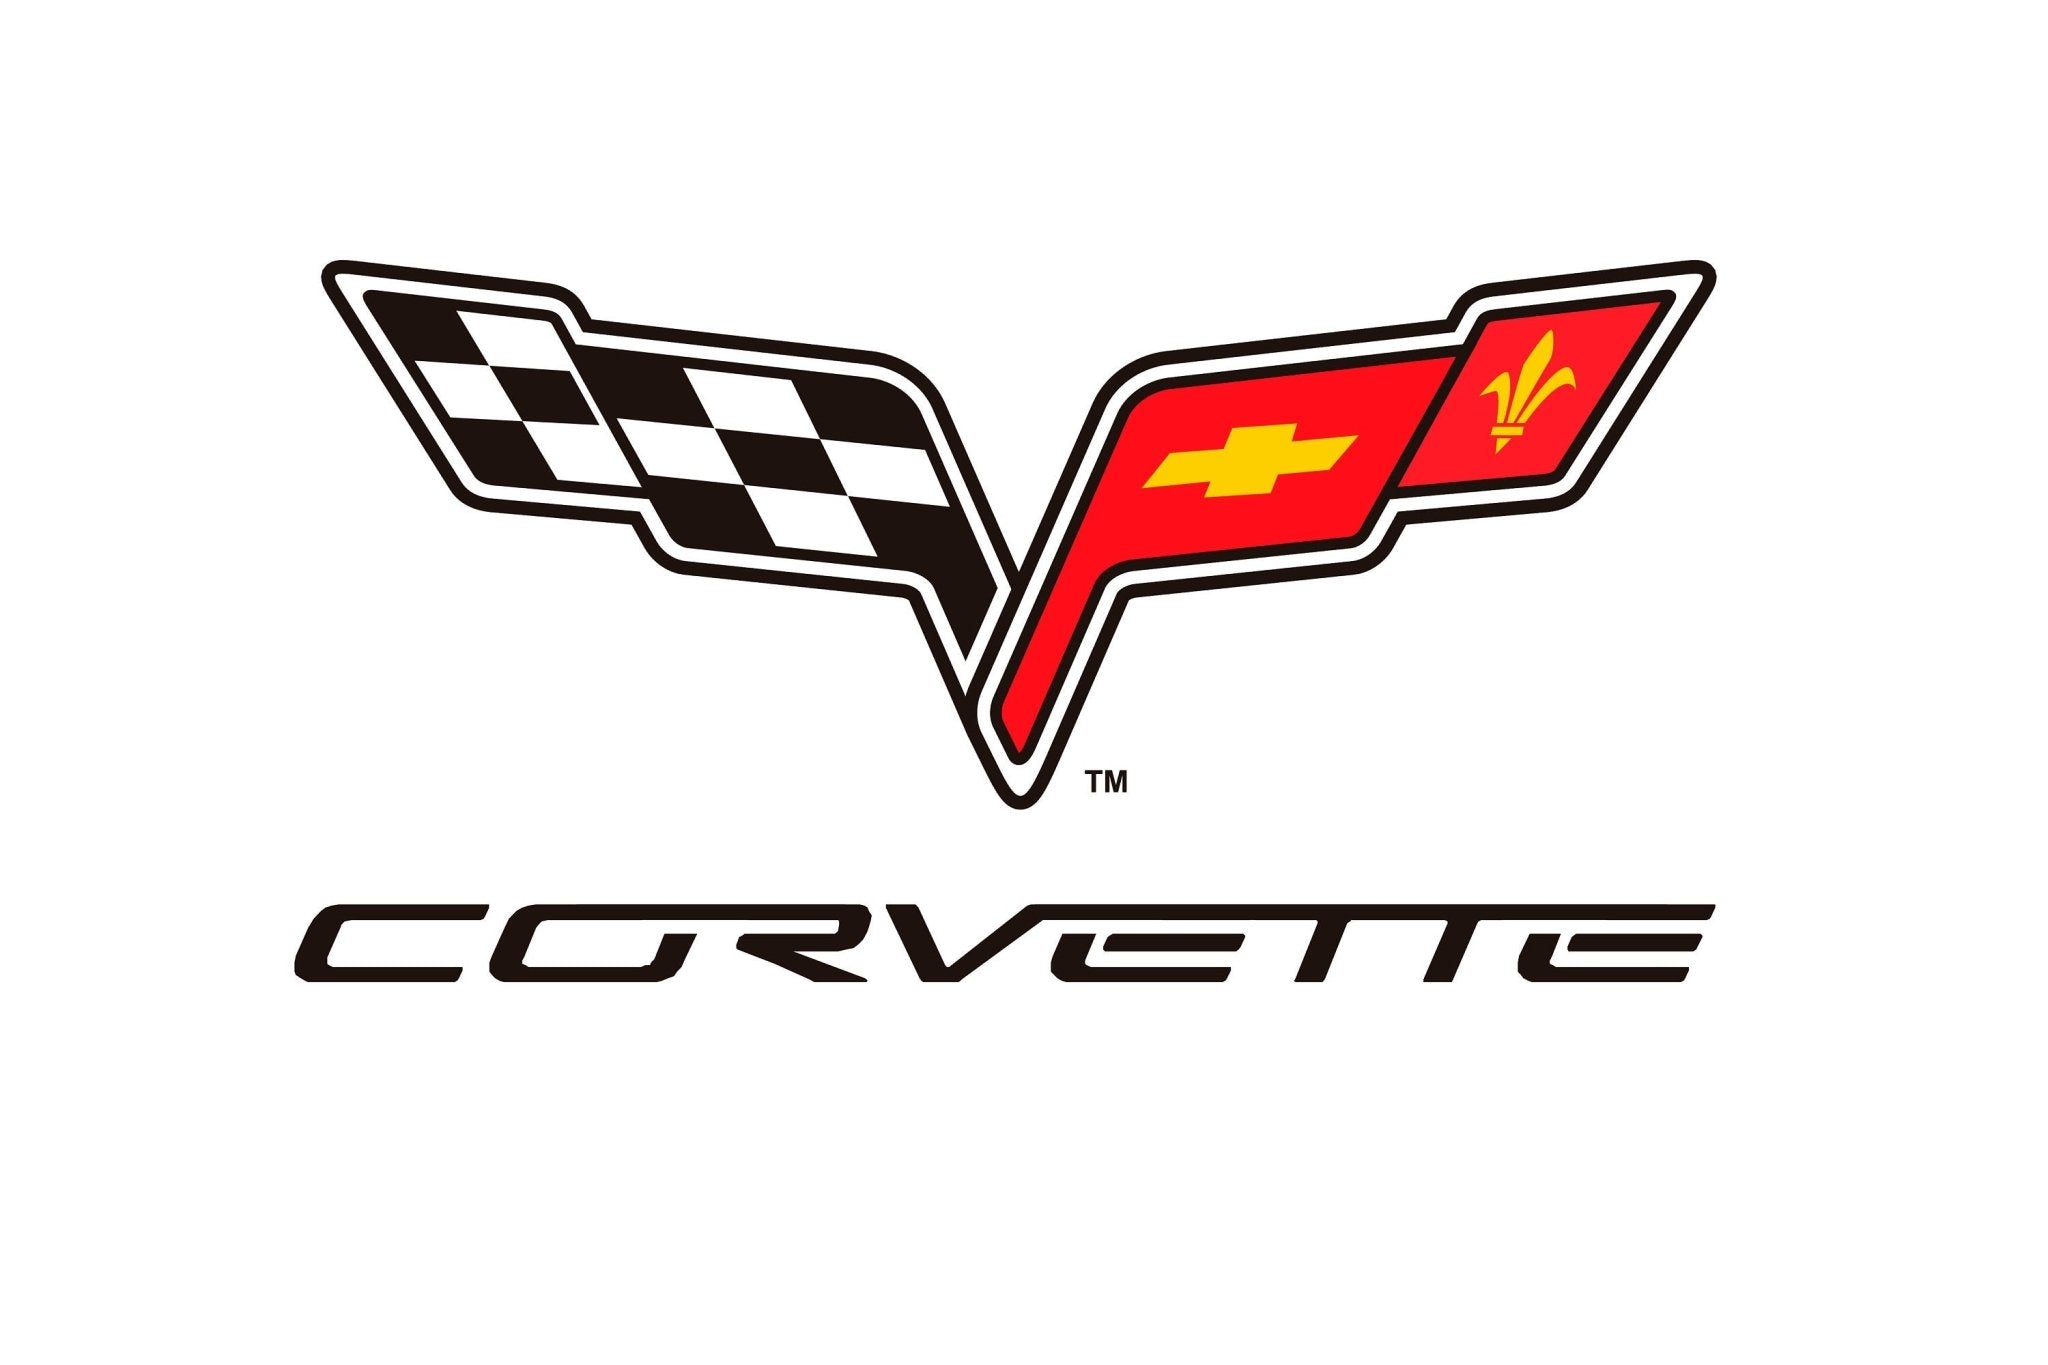 Corvette C6 Logo with Corvette Script Instant Download, Vector, Car, Emblem, SVG, Cut File, Print, Digital, Scrapbooking, Cameo, Cricut - Vette1 - C6 Downloads